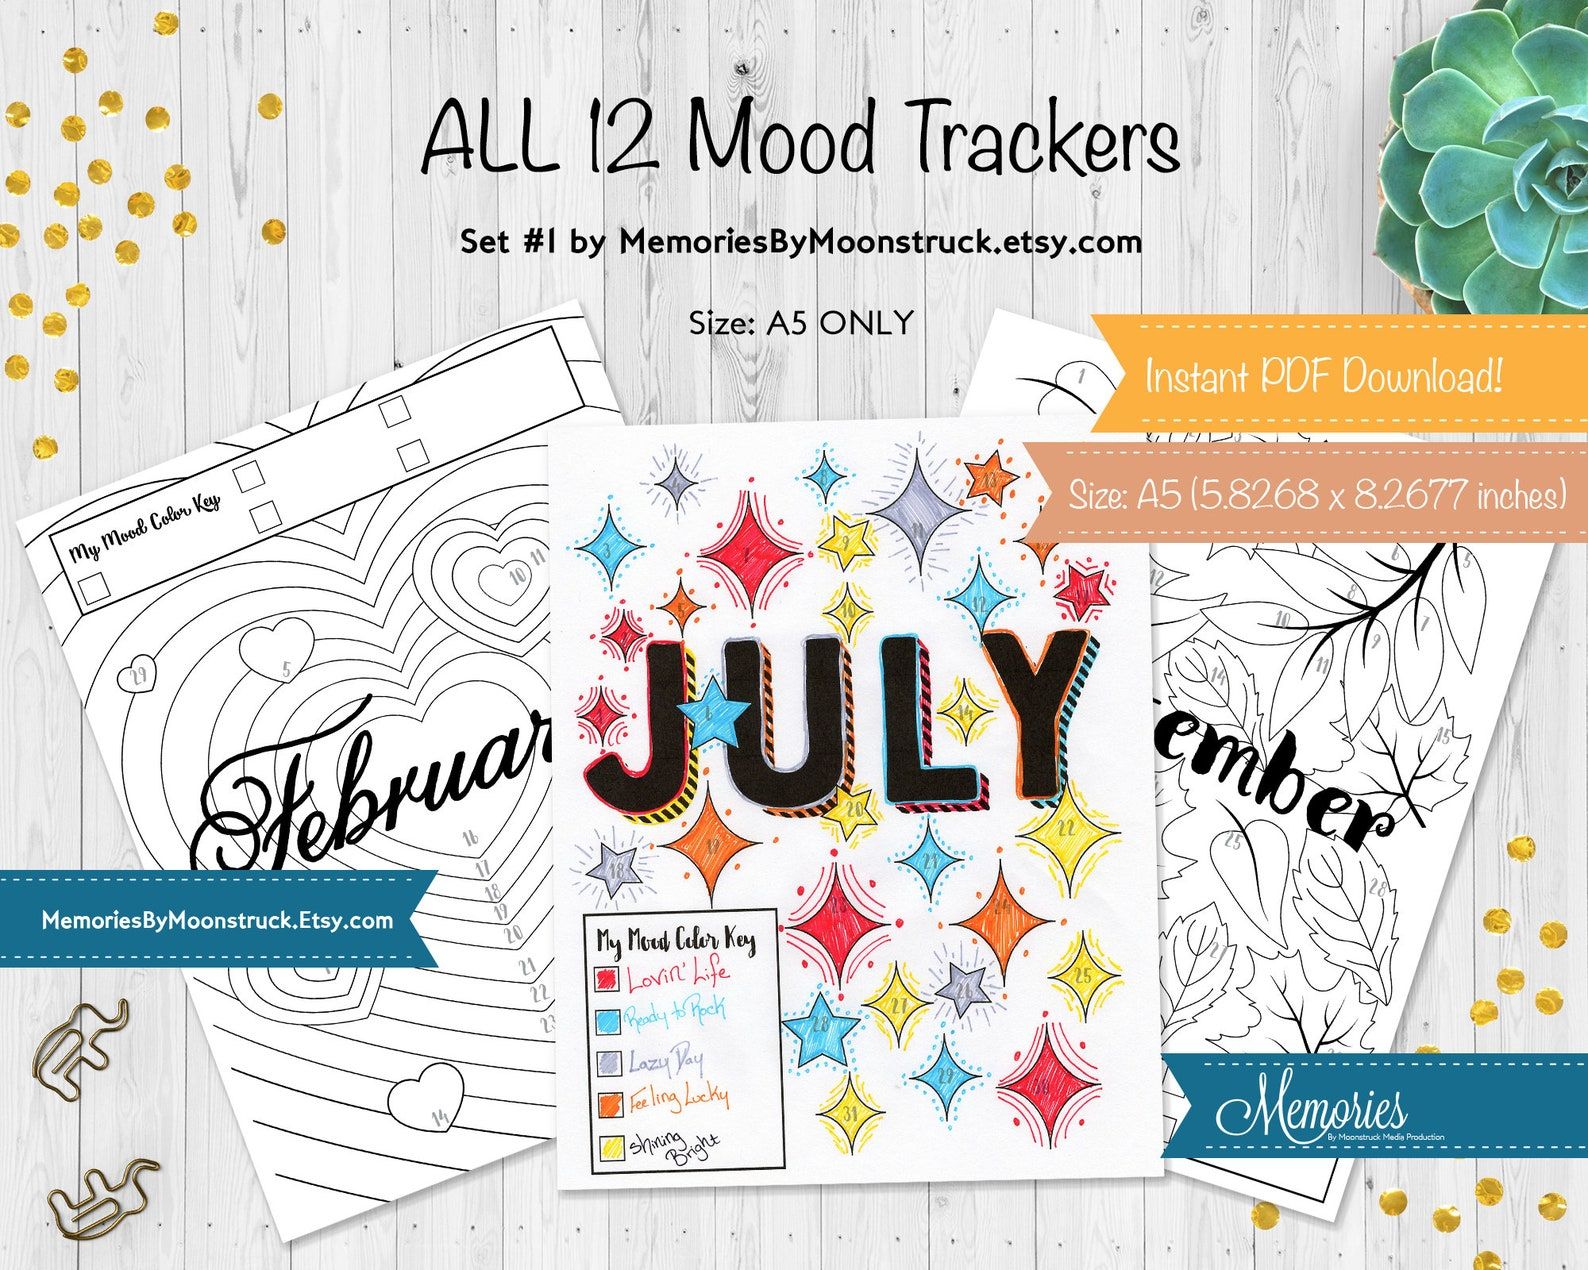 Moonstruck mood trackers